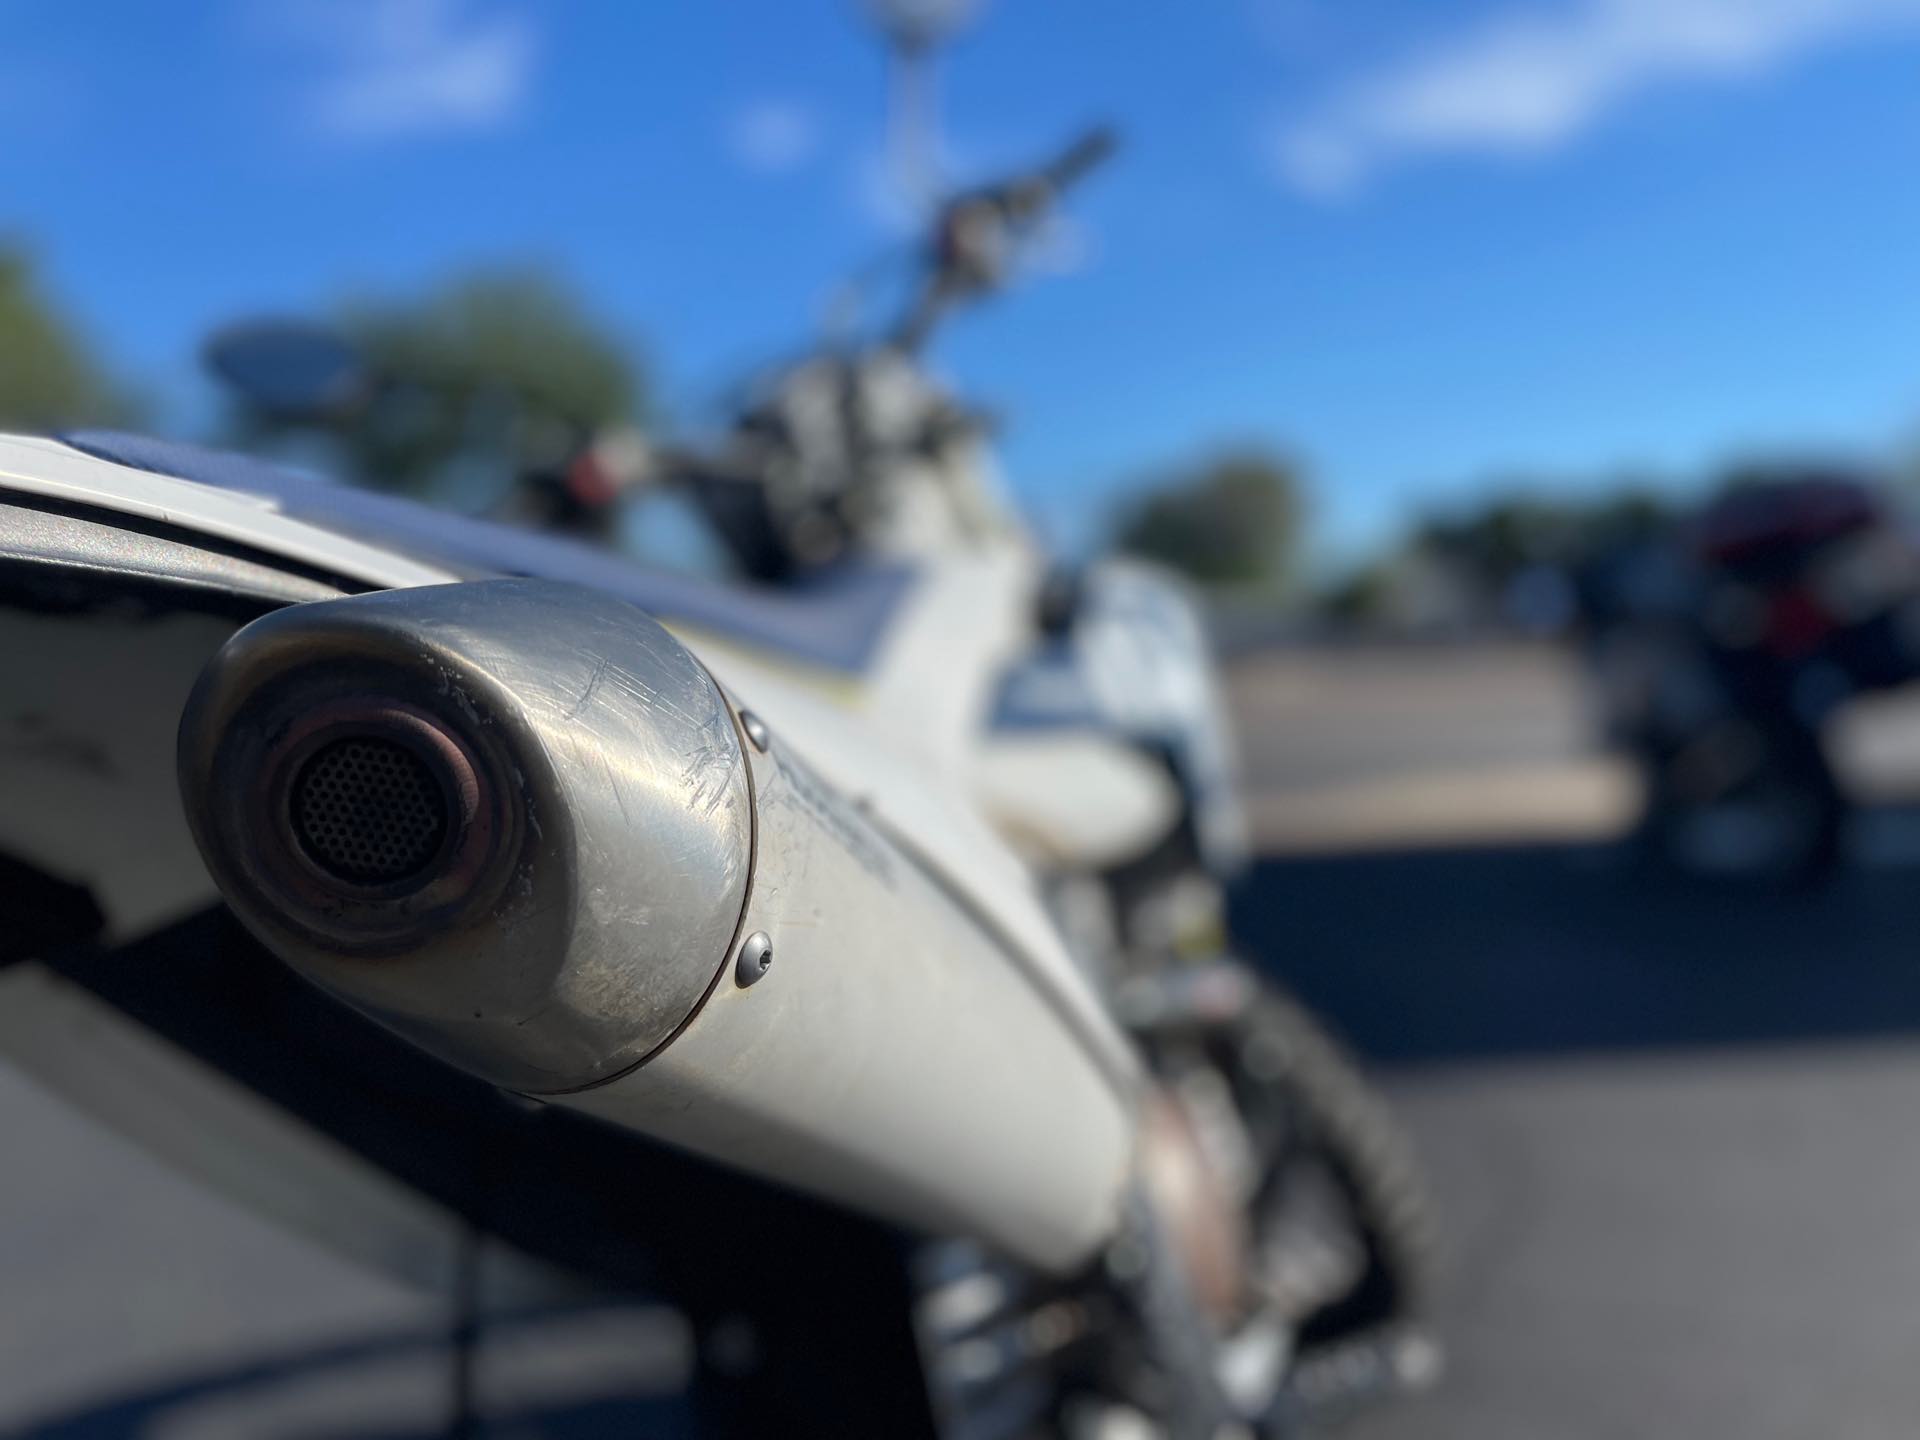 2018 Husqvarna FE 350 at Bobby J's Yamaha, Albuquerque, NM 87110